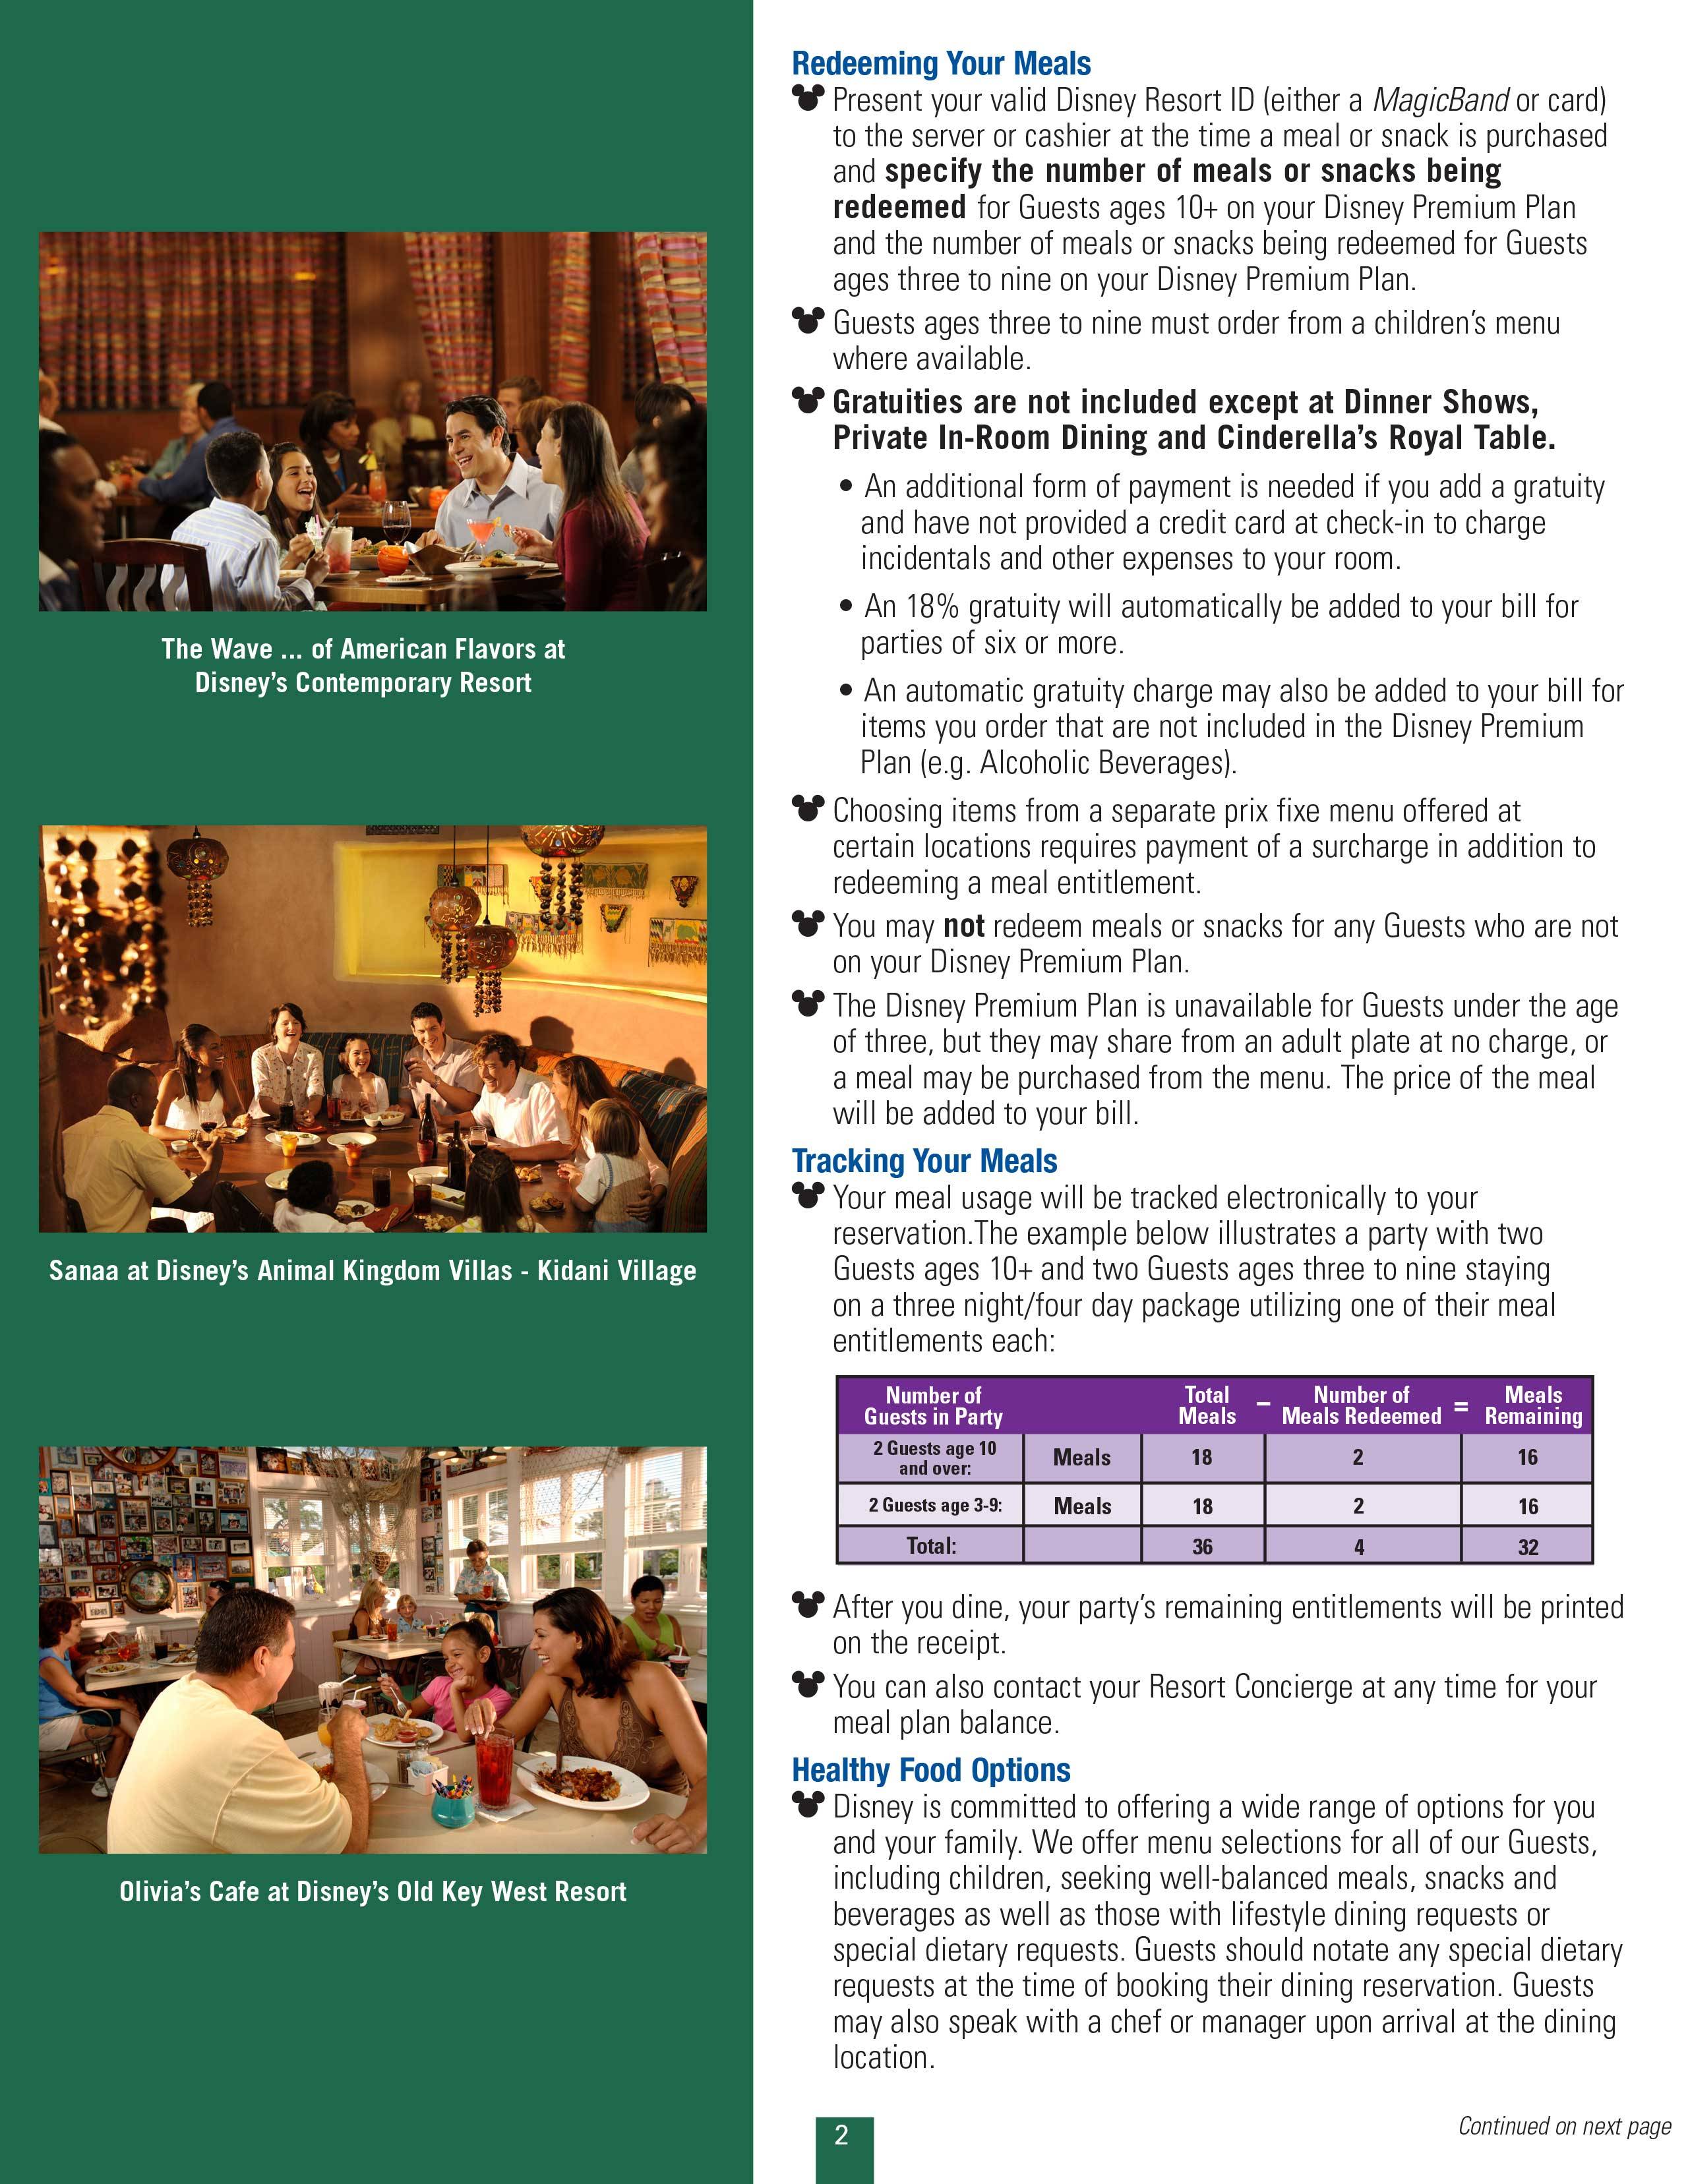 2015 Disney Premium Plan brochure - Page 2